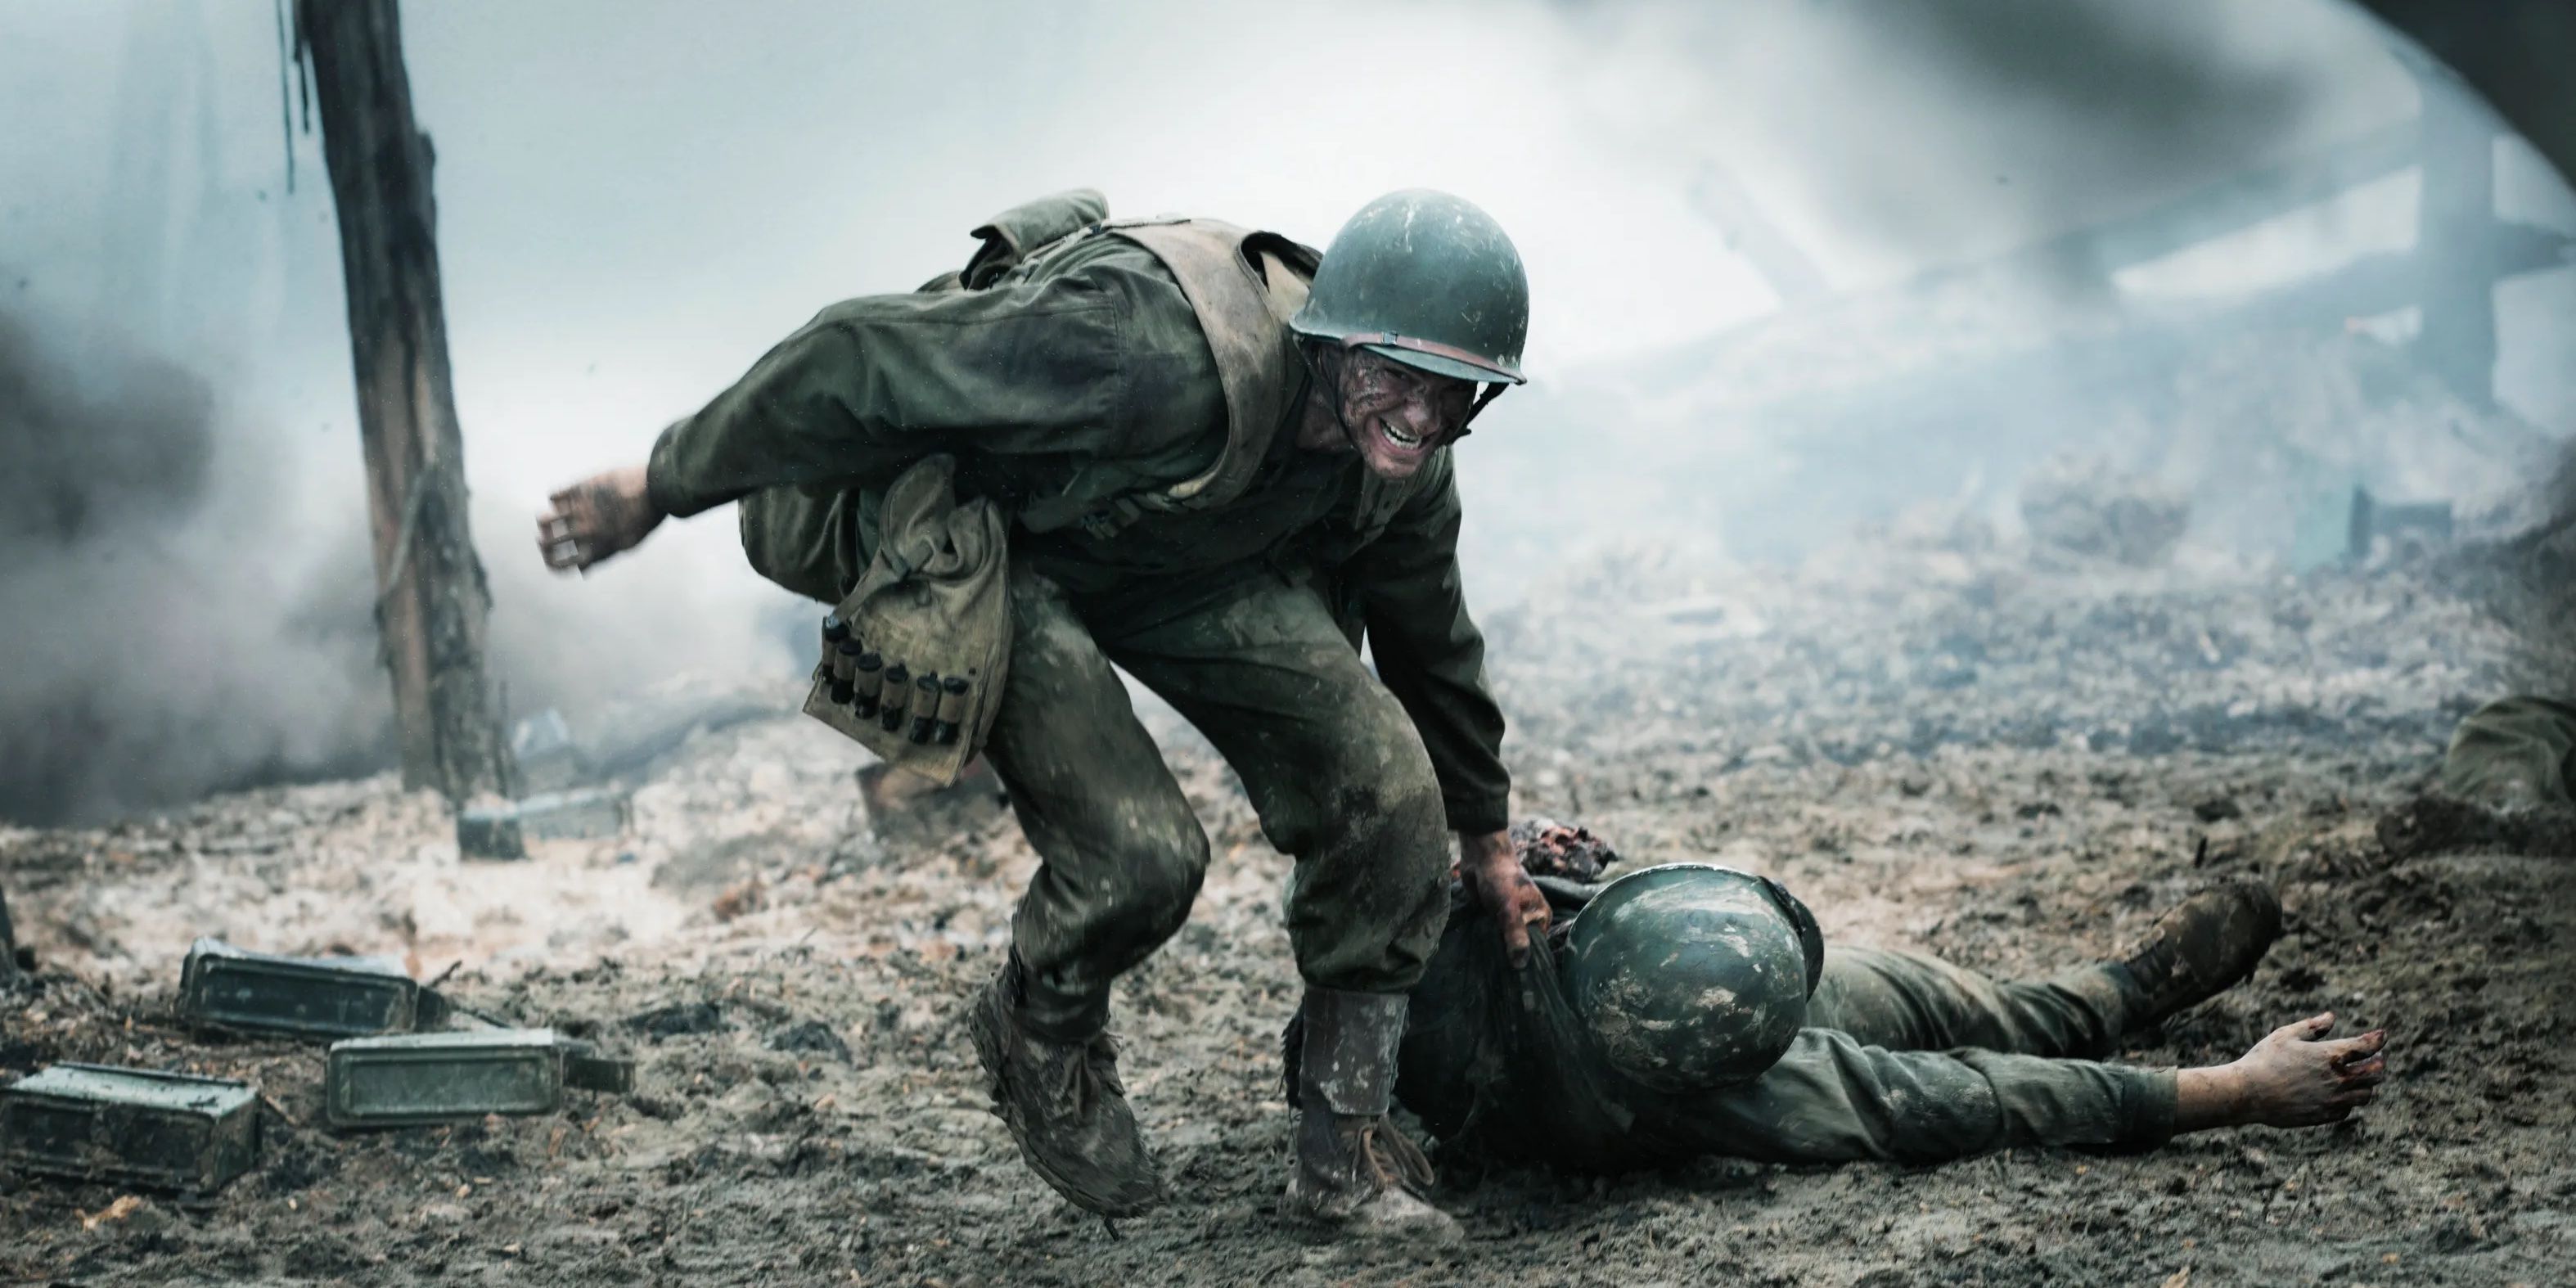 Andrew Garfield as Desmond Doss rescuing a fallen soldier from battlefield in Hacksaw Ridge.